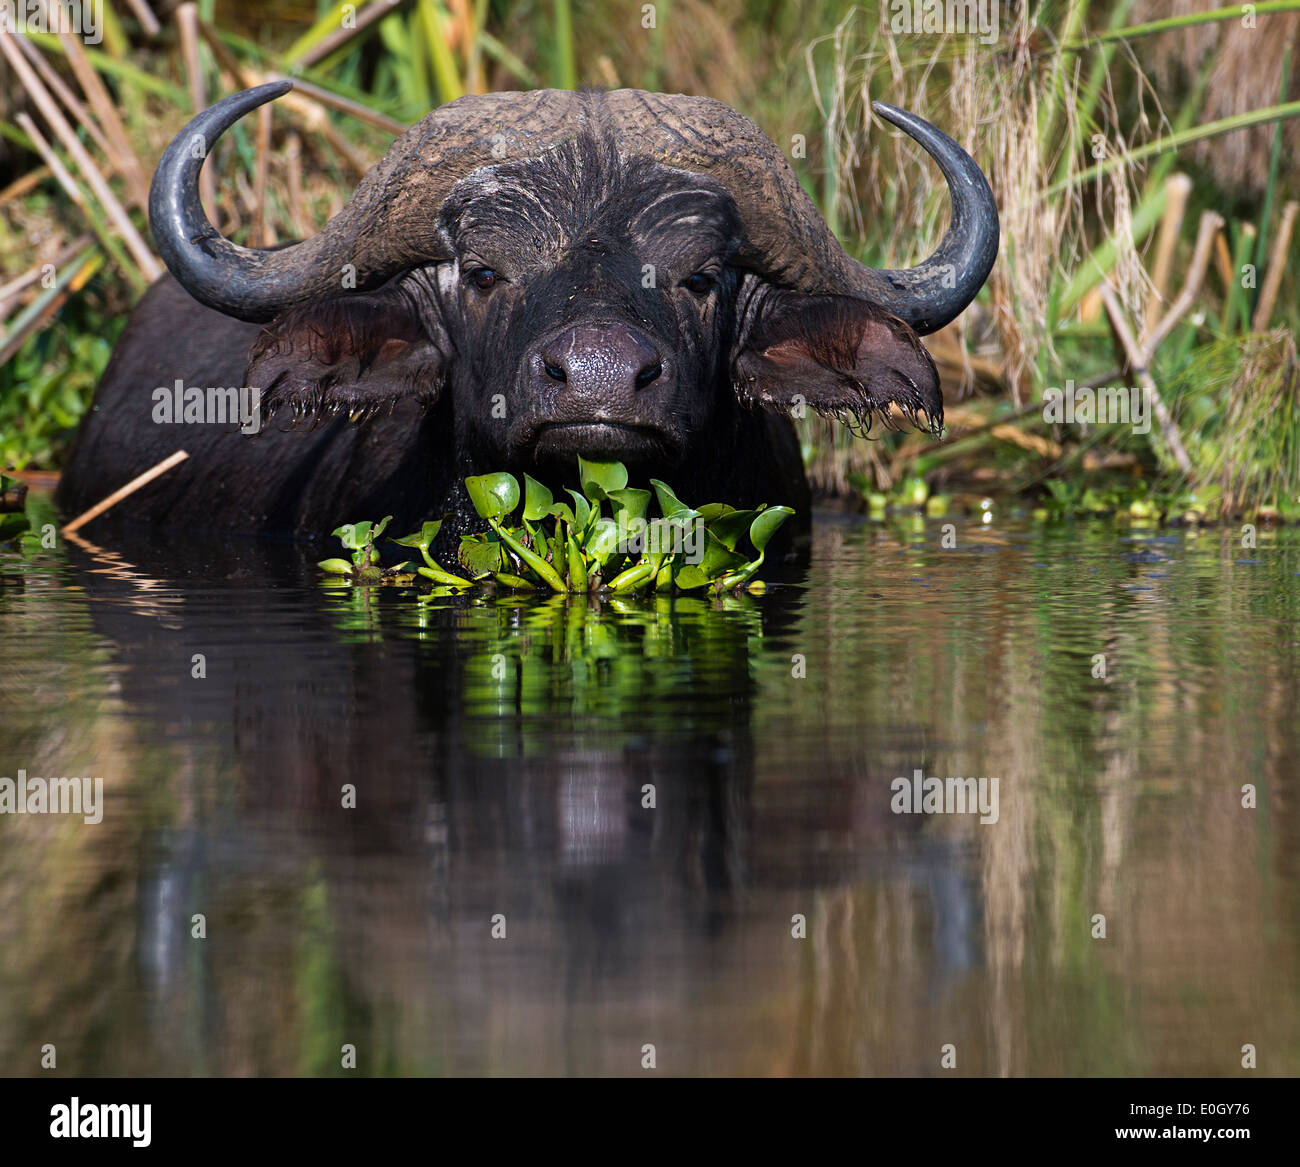 Bufalo d'acqua, African buffalo, African buffalo (Syncerus caffer) fata cosa tra il papiro in salamoia a Naivasha, Kenya Foto Stock